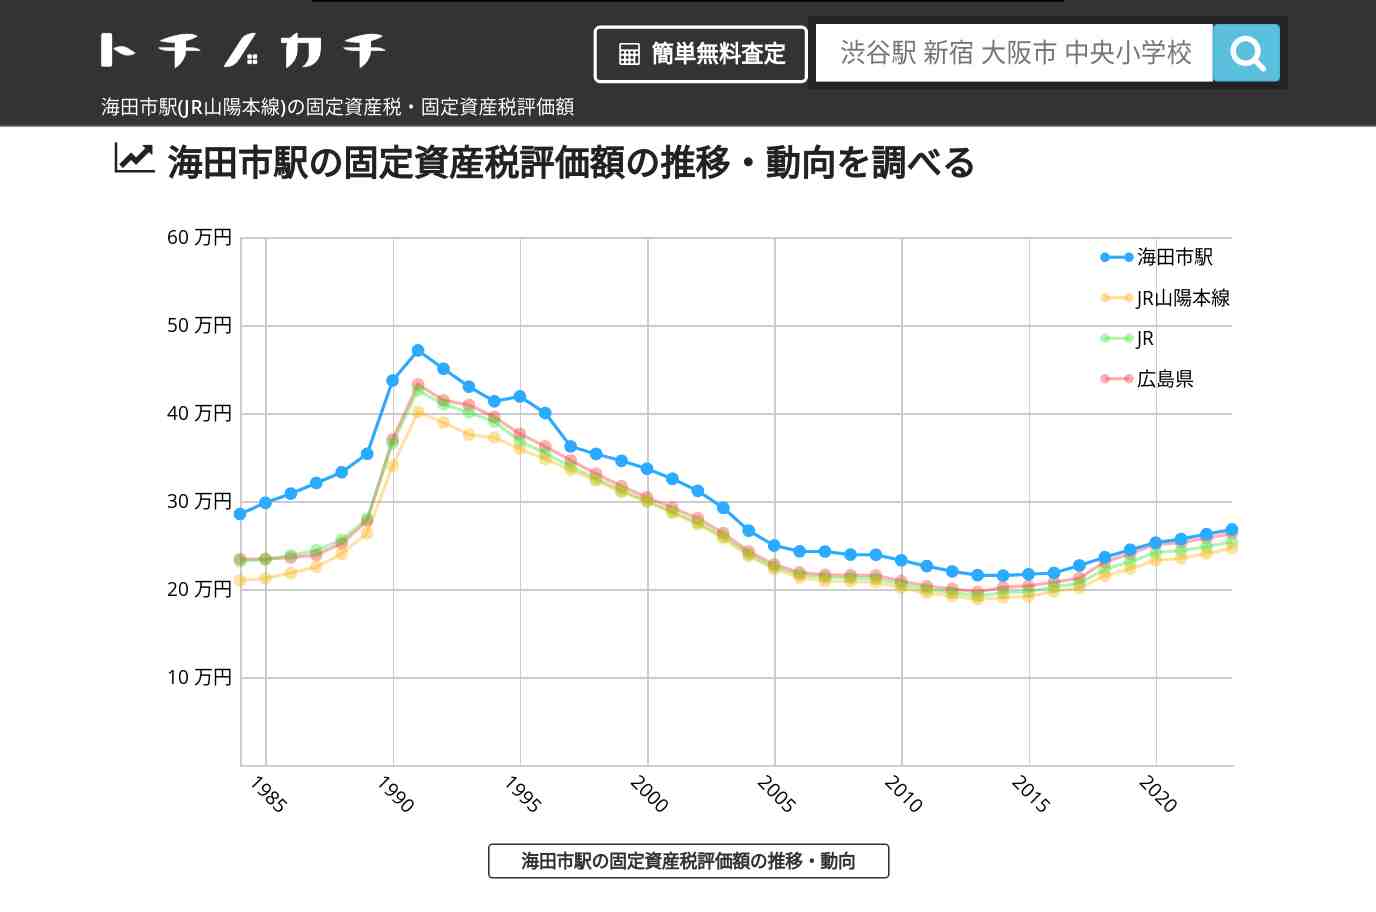 海田市駅(JR山陽本線)の固定資産税・固定資産税評価額 | トチノカチ